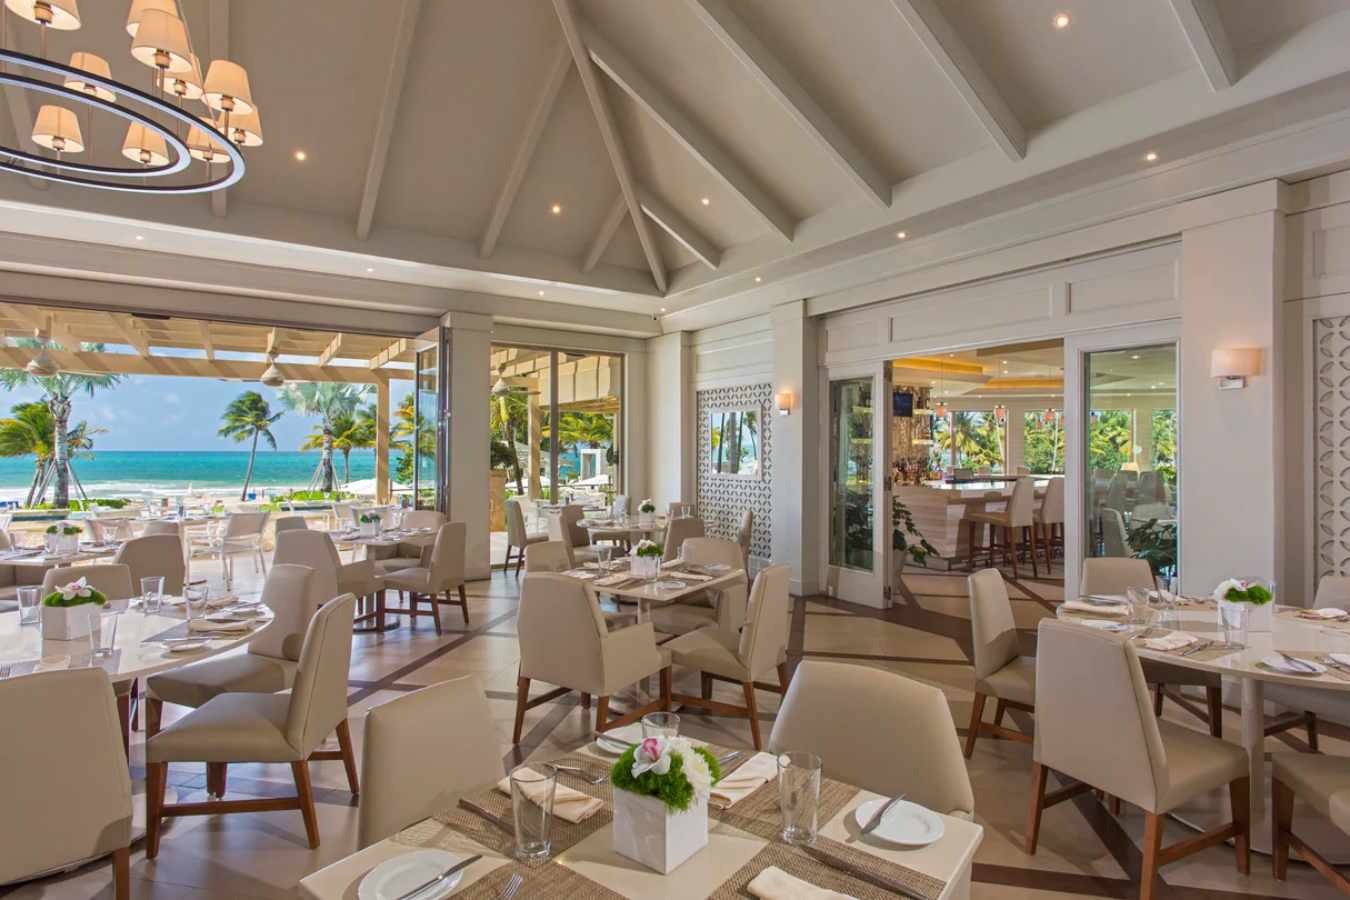 The St. Regis Bahia Beach Resort, Puerto Rico Seagrapes Restaurant